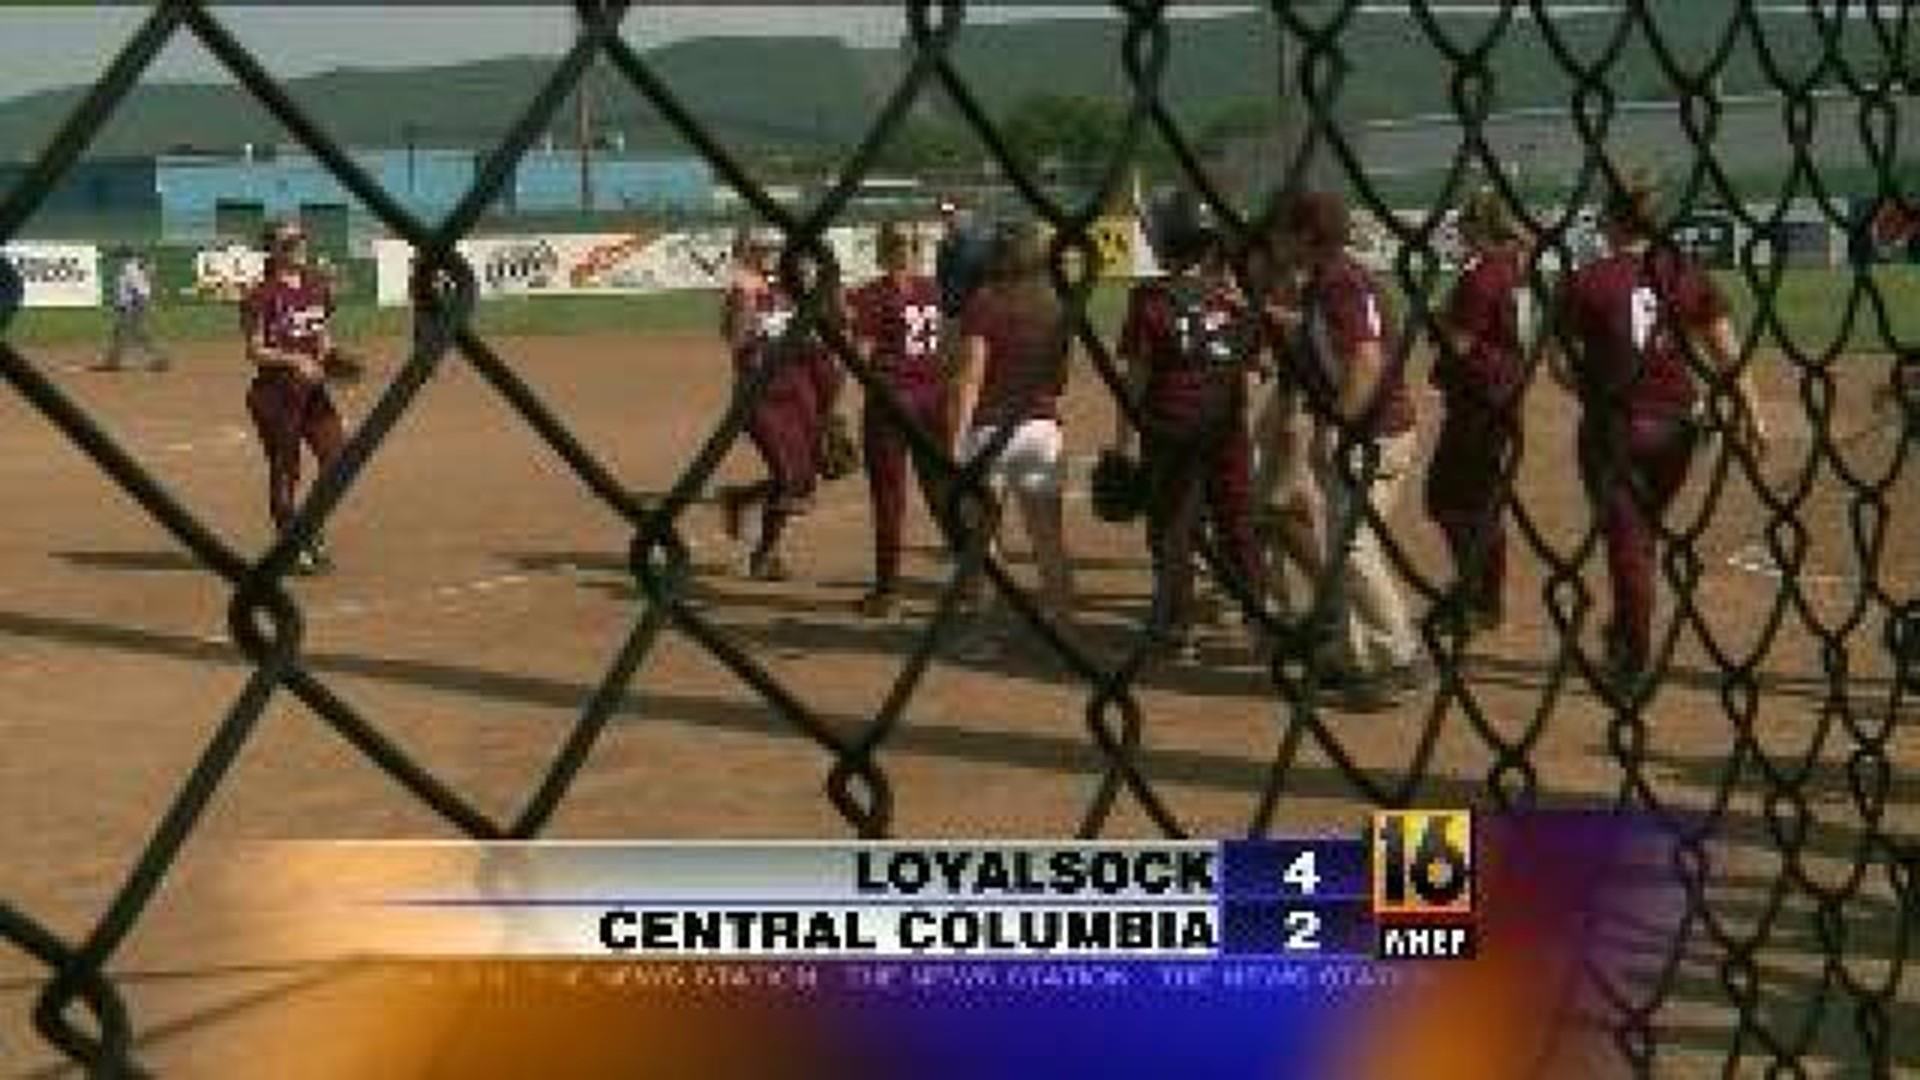 Loyalsock vs Central Columbia Softball